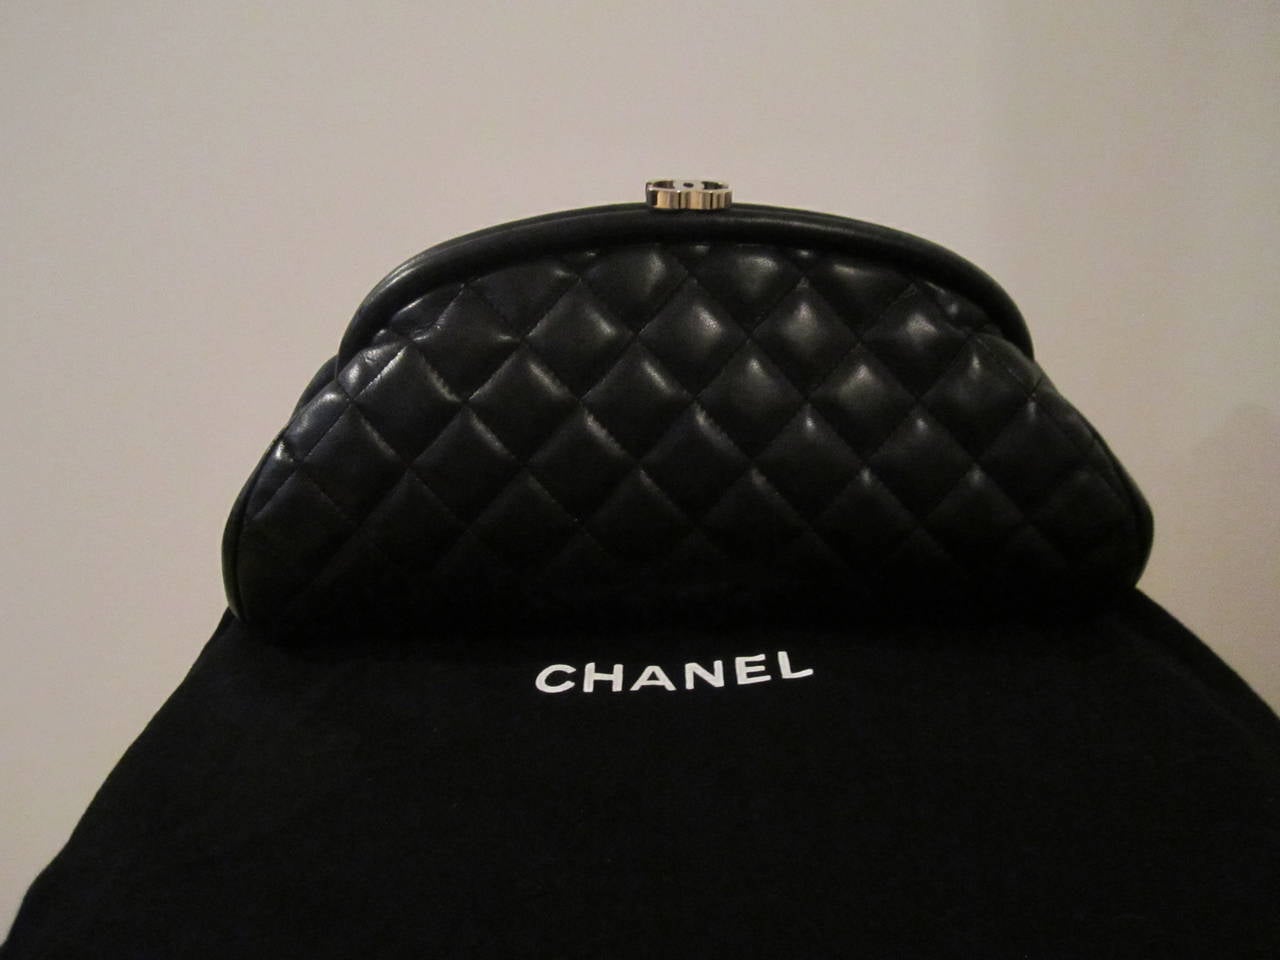 Authentic Chanel Black Leather Classic Clutch Handbag 5